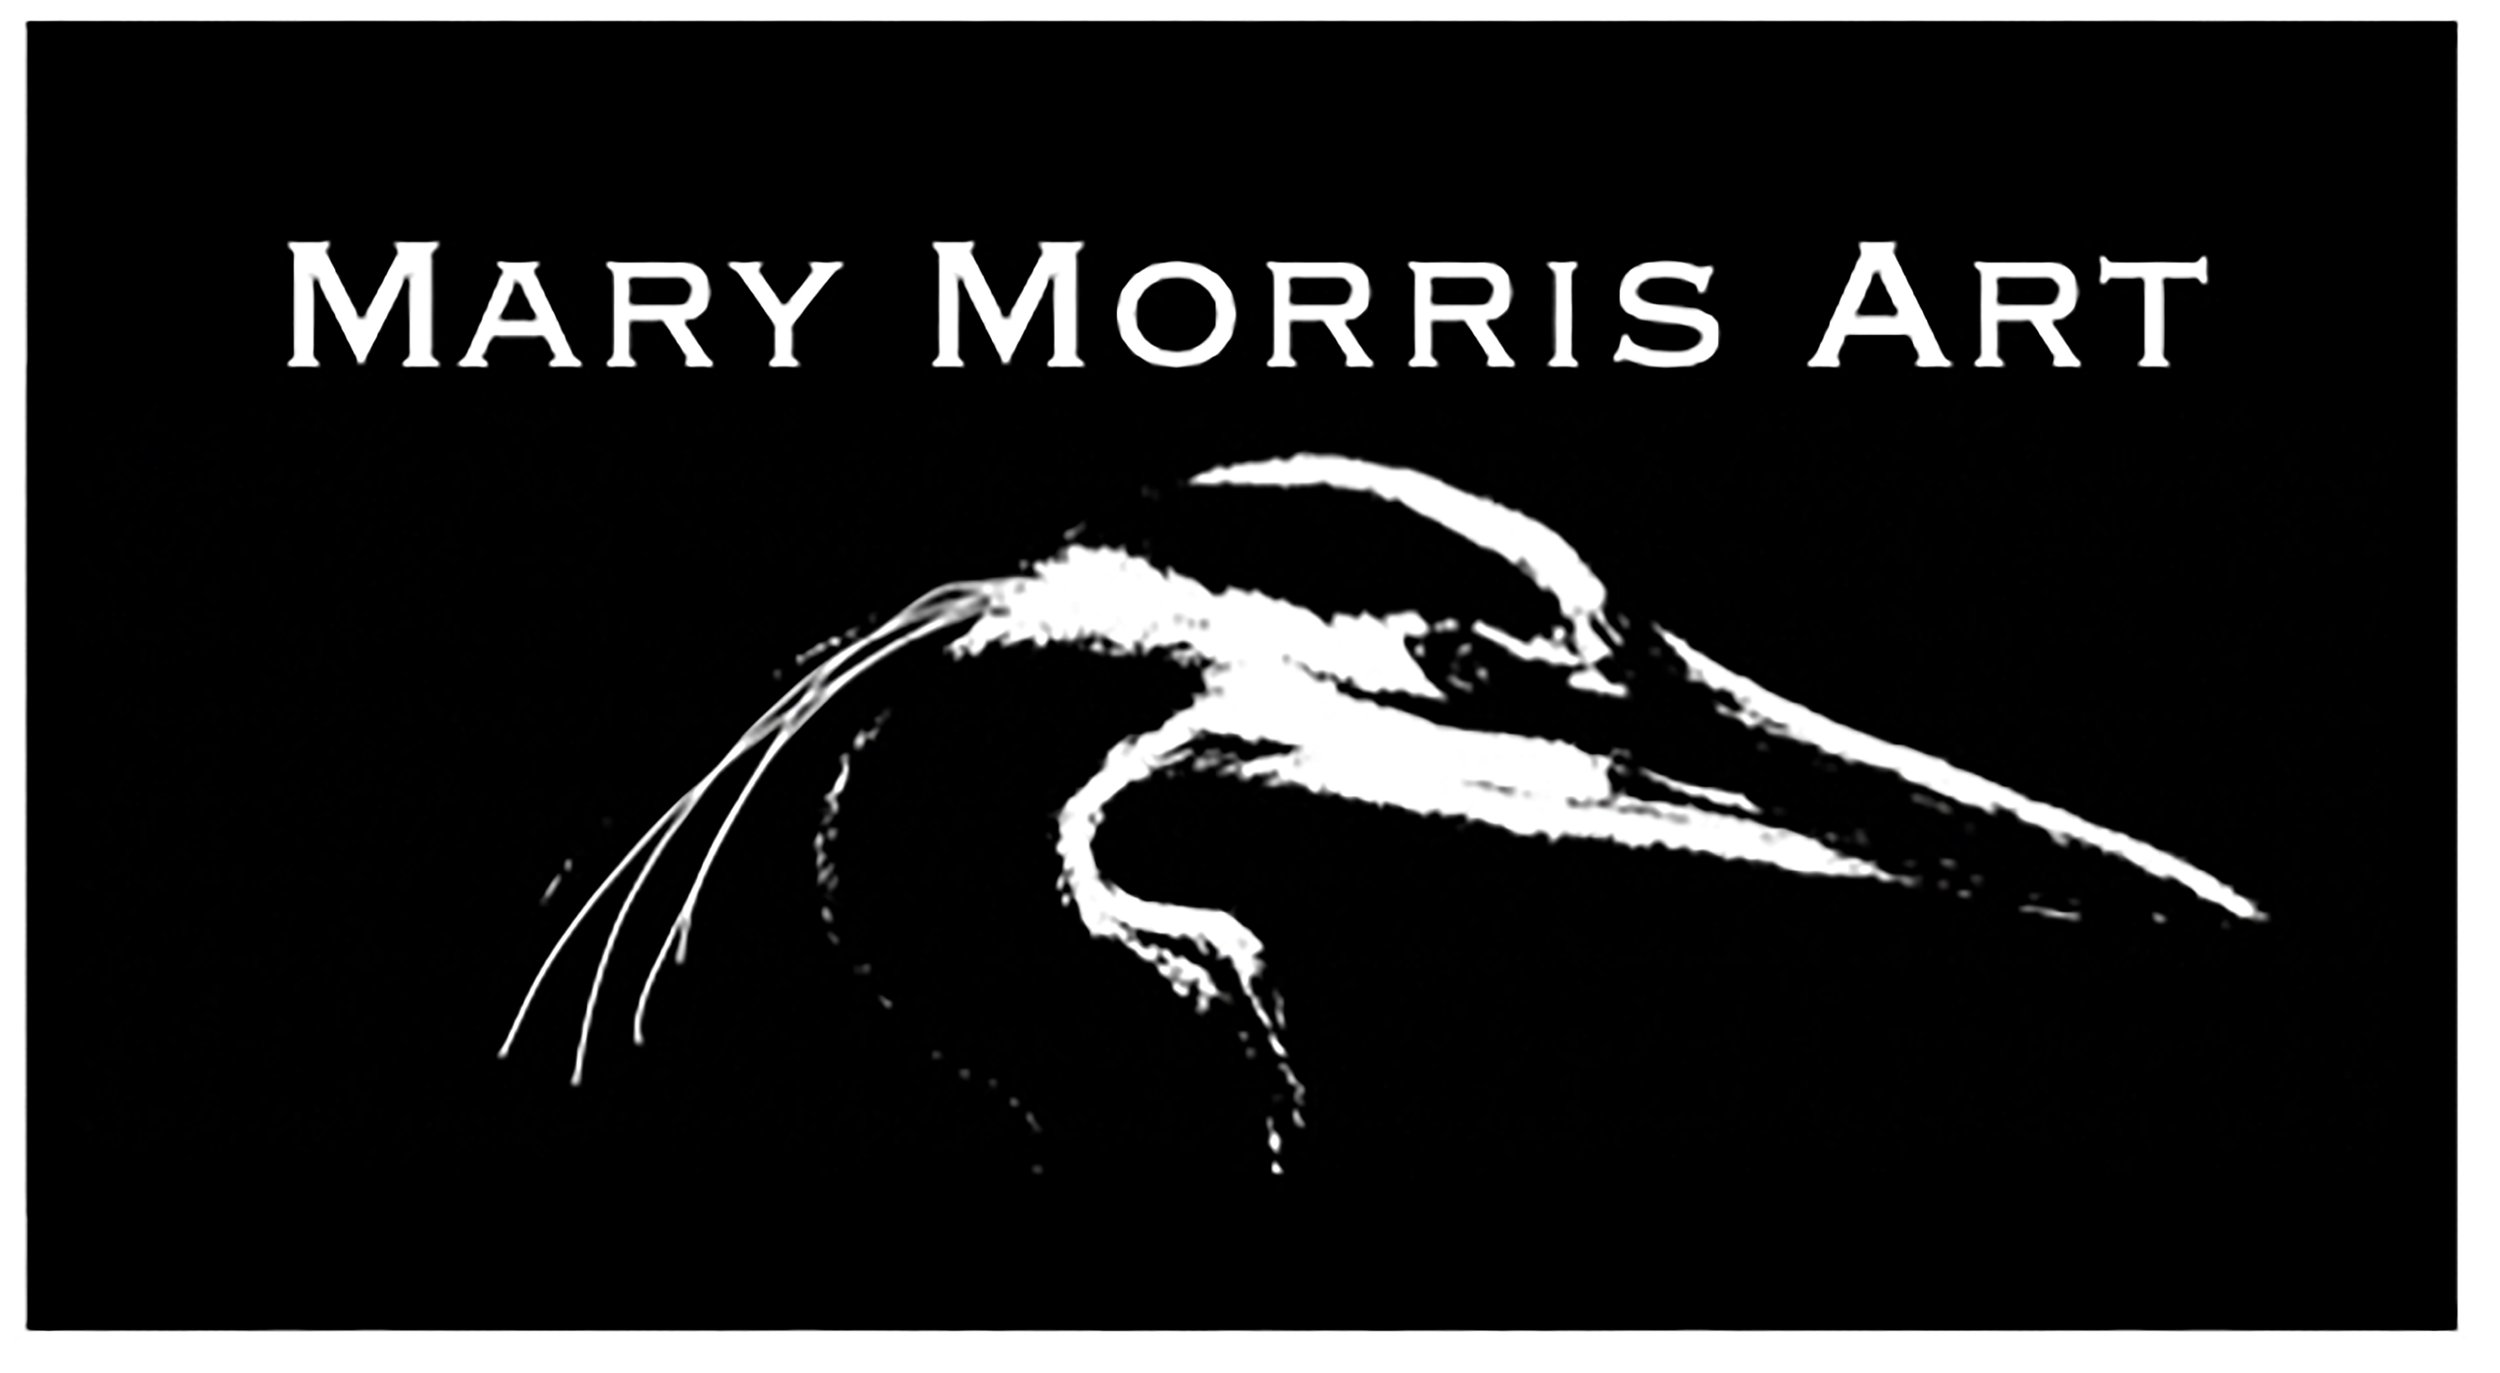 mary morris art heron logo resize.1.jpeg